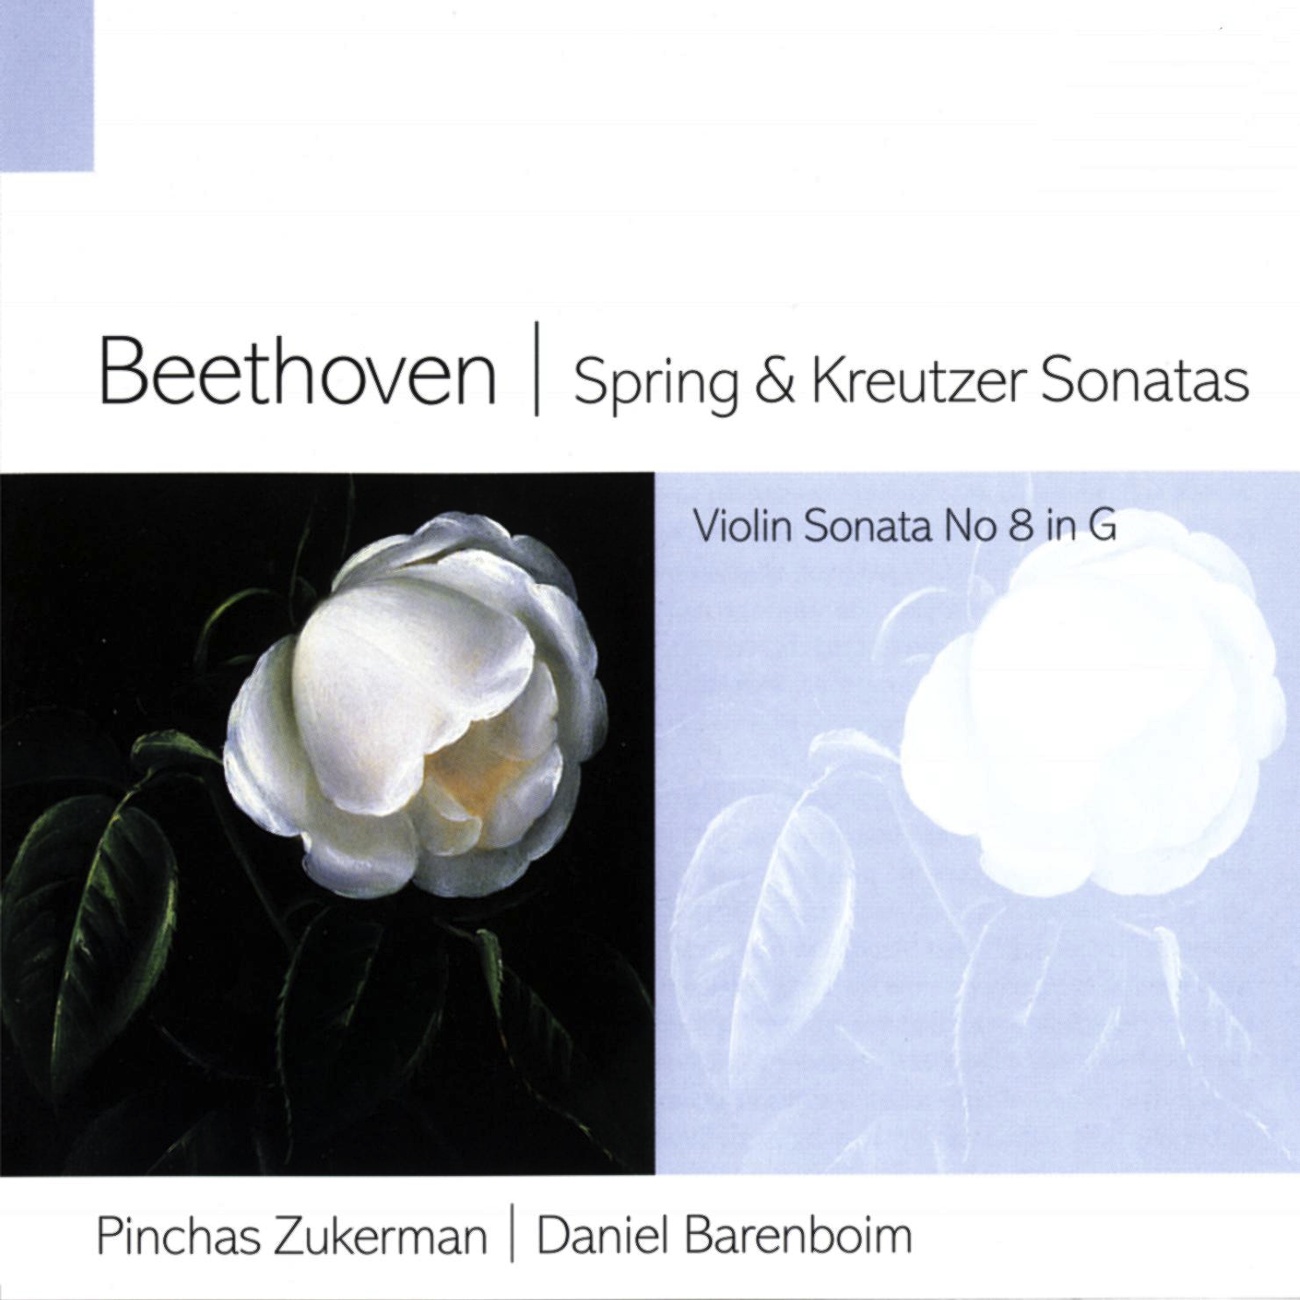 Beethoven Spring & Kreutzer Sonatas